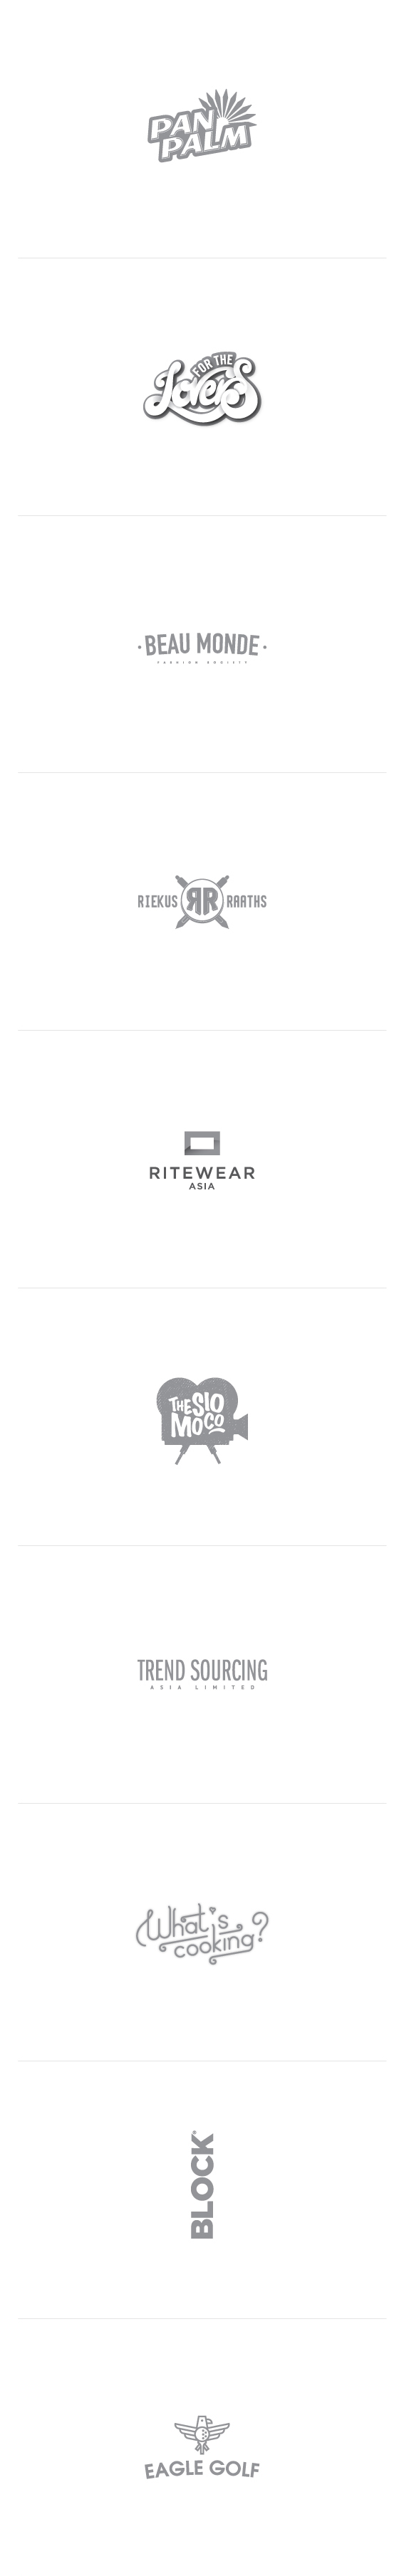 Love design illustrations logo logos amazing quirky modern corporate Idenitity BrandingPackaging riekus Raaths RIKI best